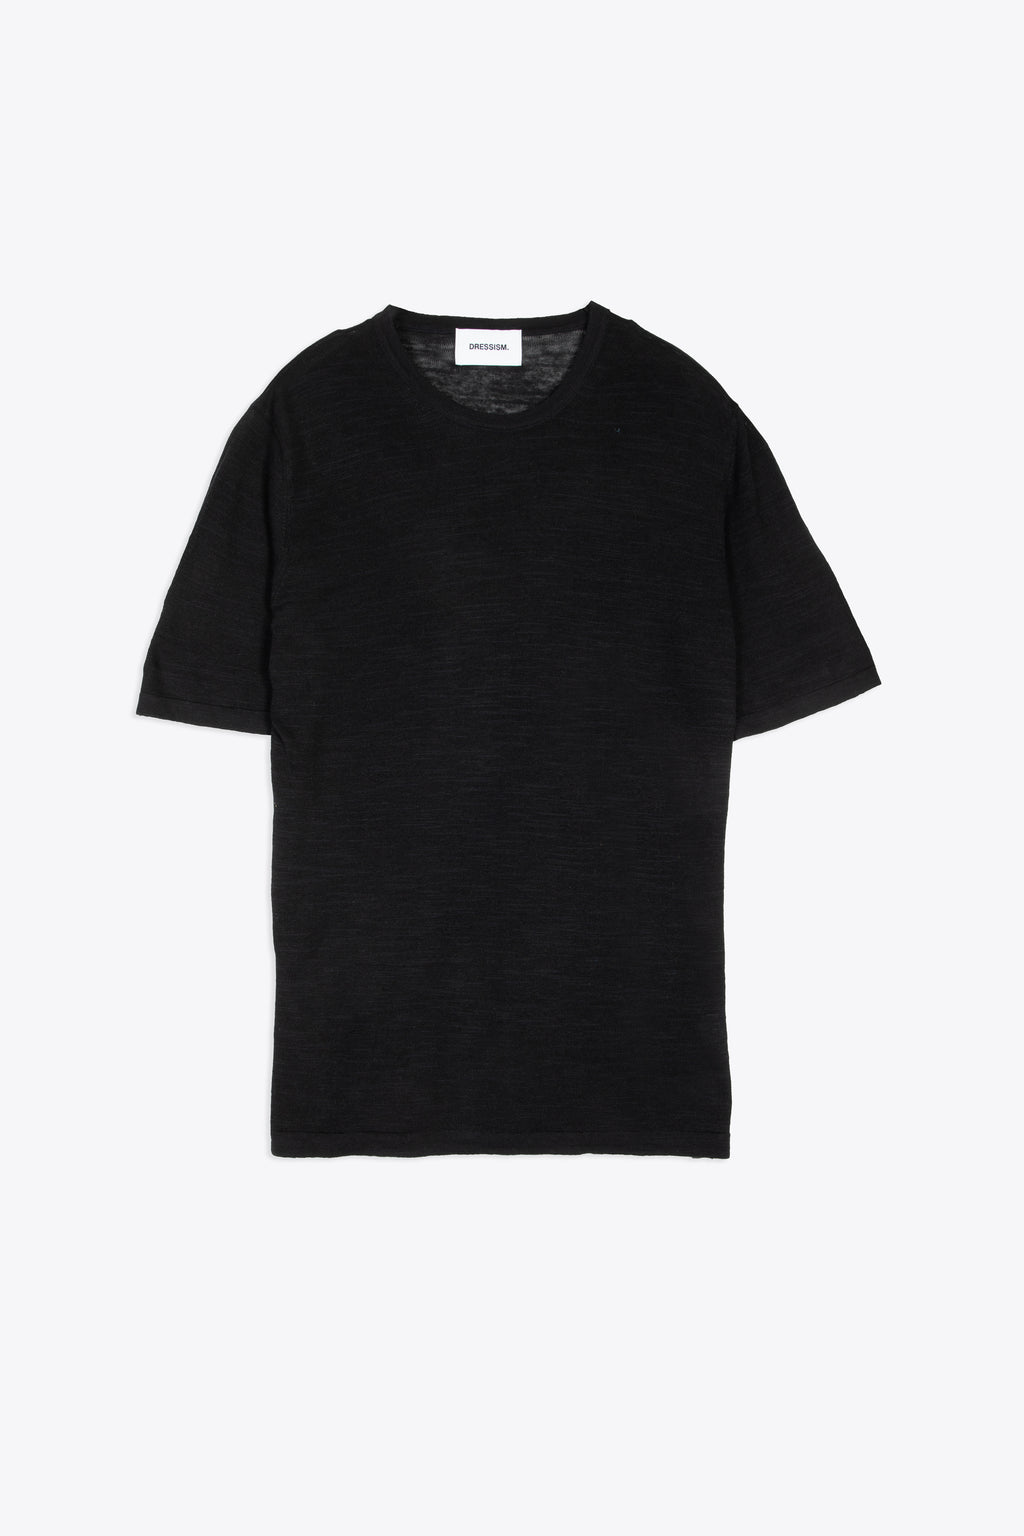 alt-image__Black-linen-blend-t-shirt